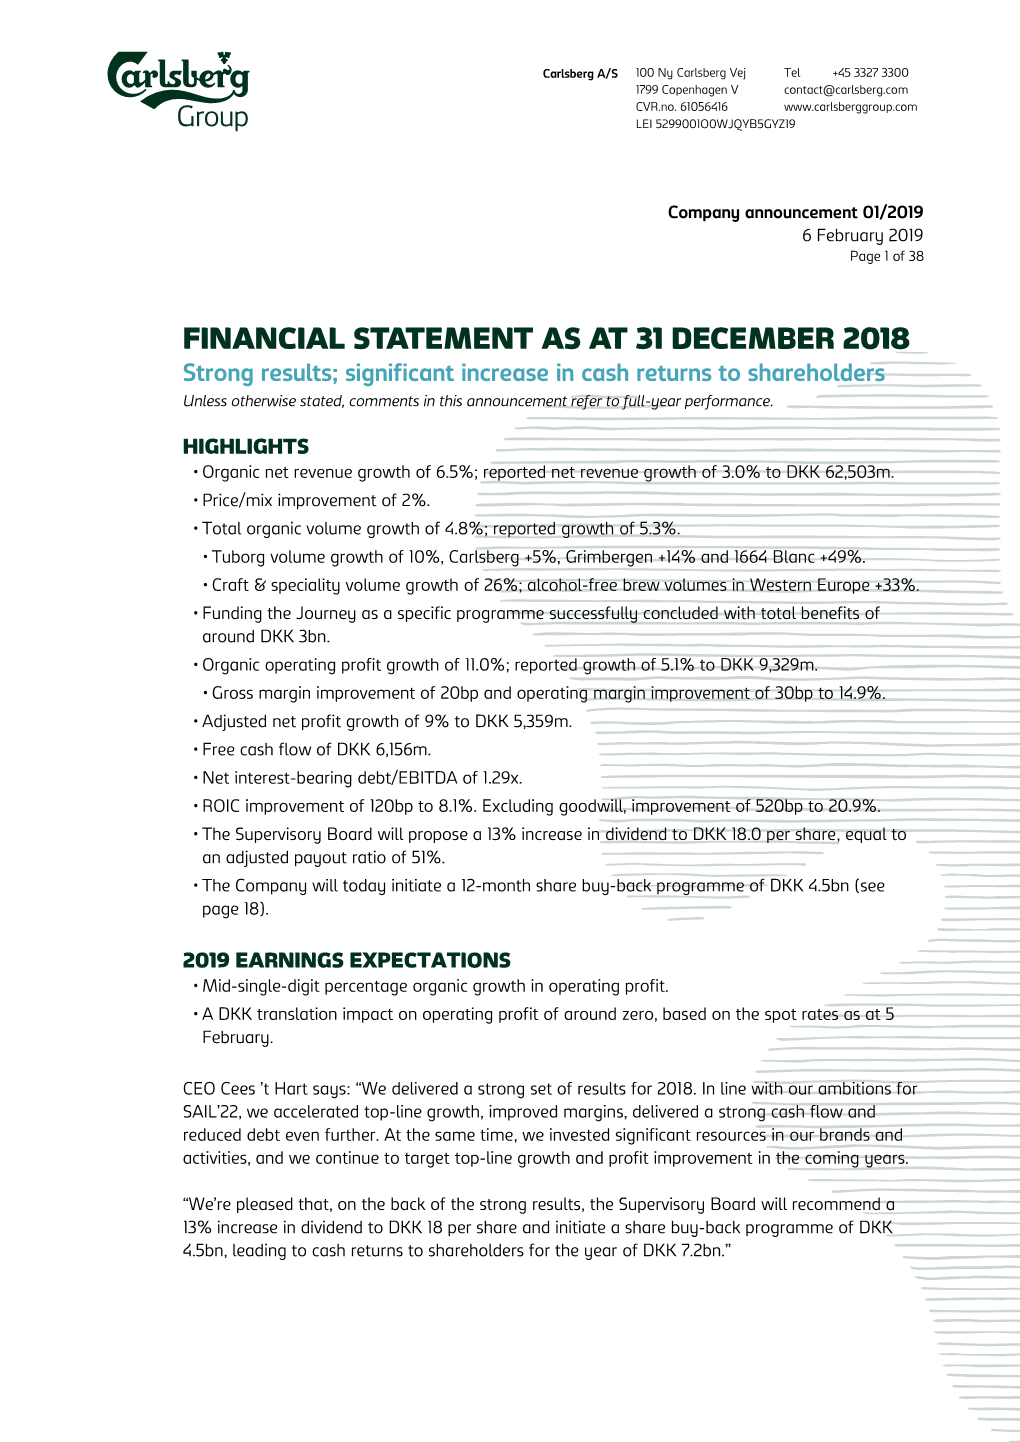 Carlsberg Group 2018 Financial Statements